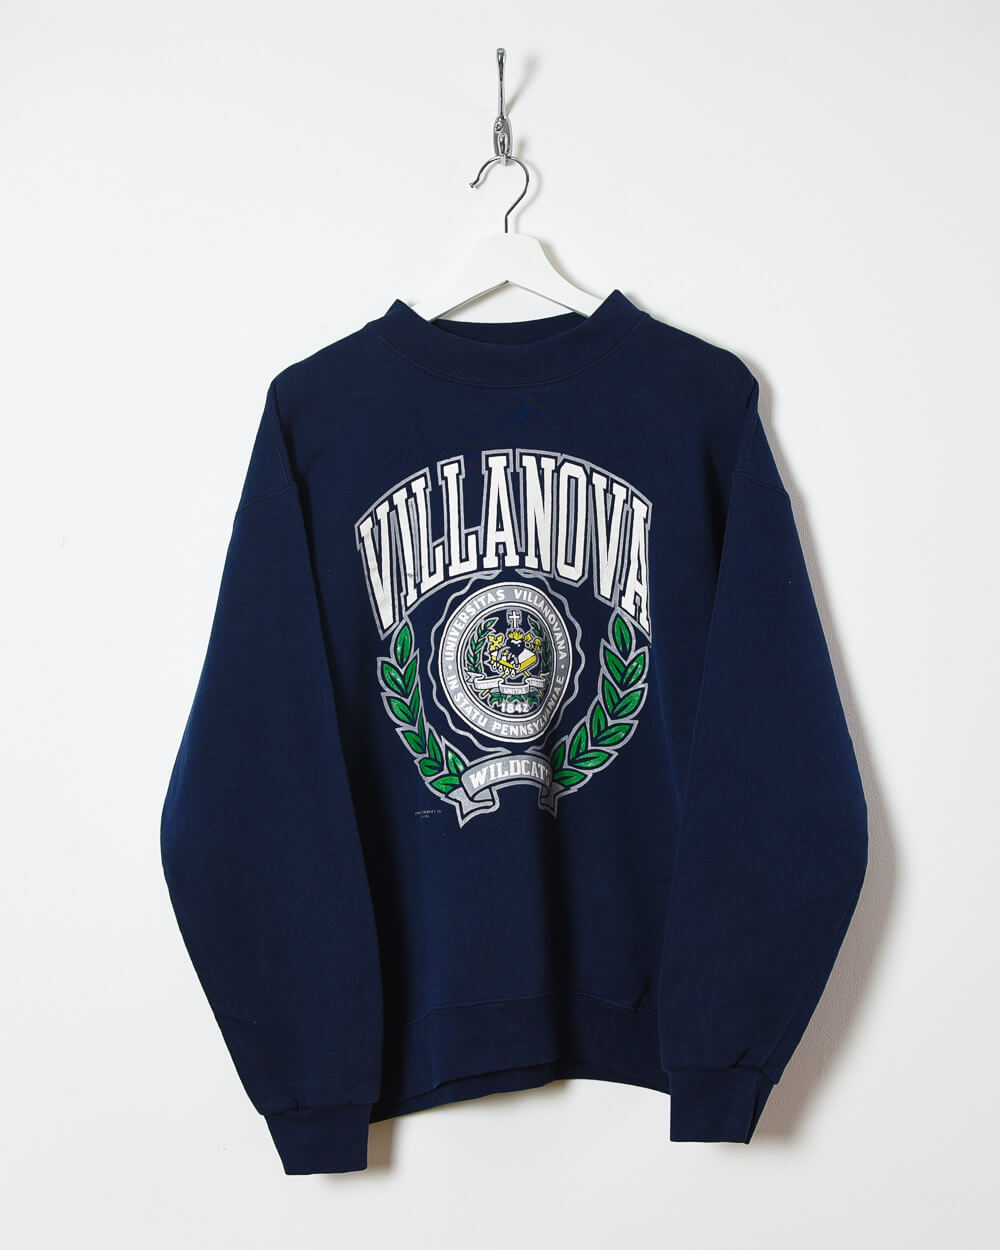 Villanova Sweatshirt - Medium - Domno Vintage 90s, 80s, 00s Retro and Vintage Clothing 